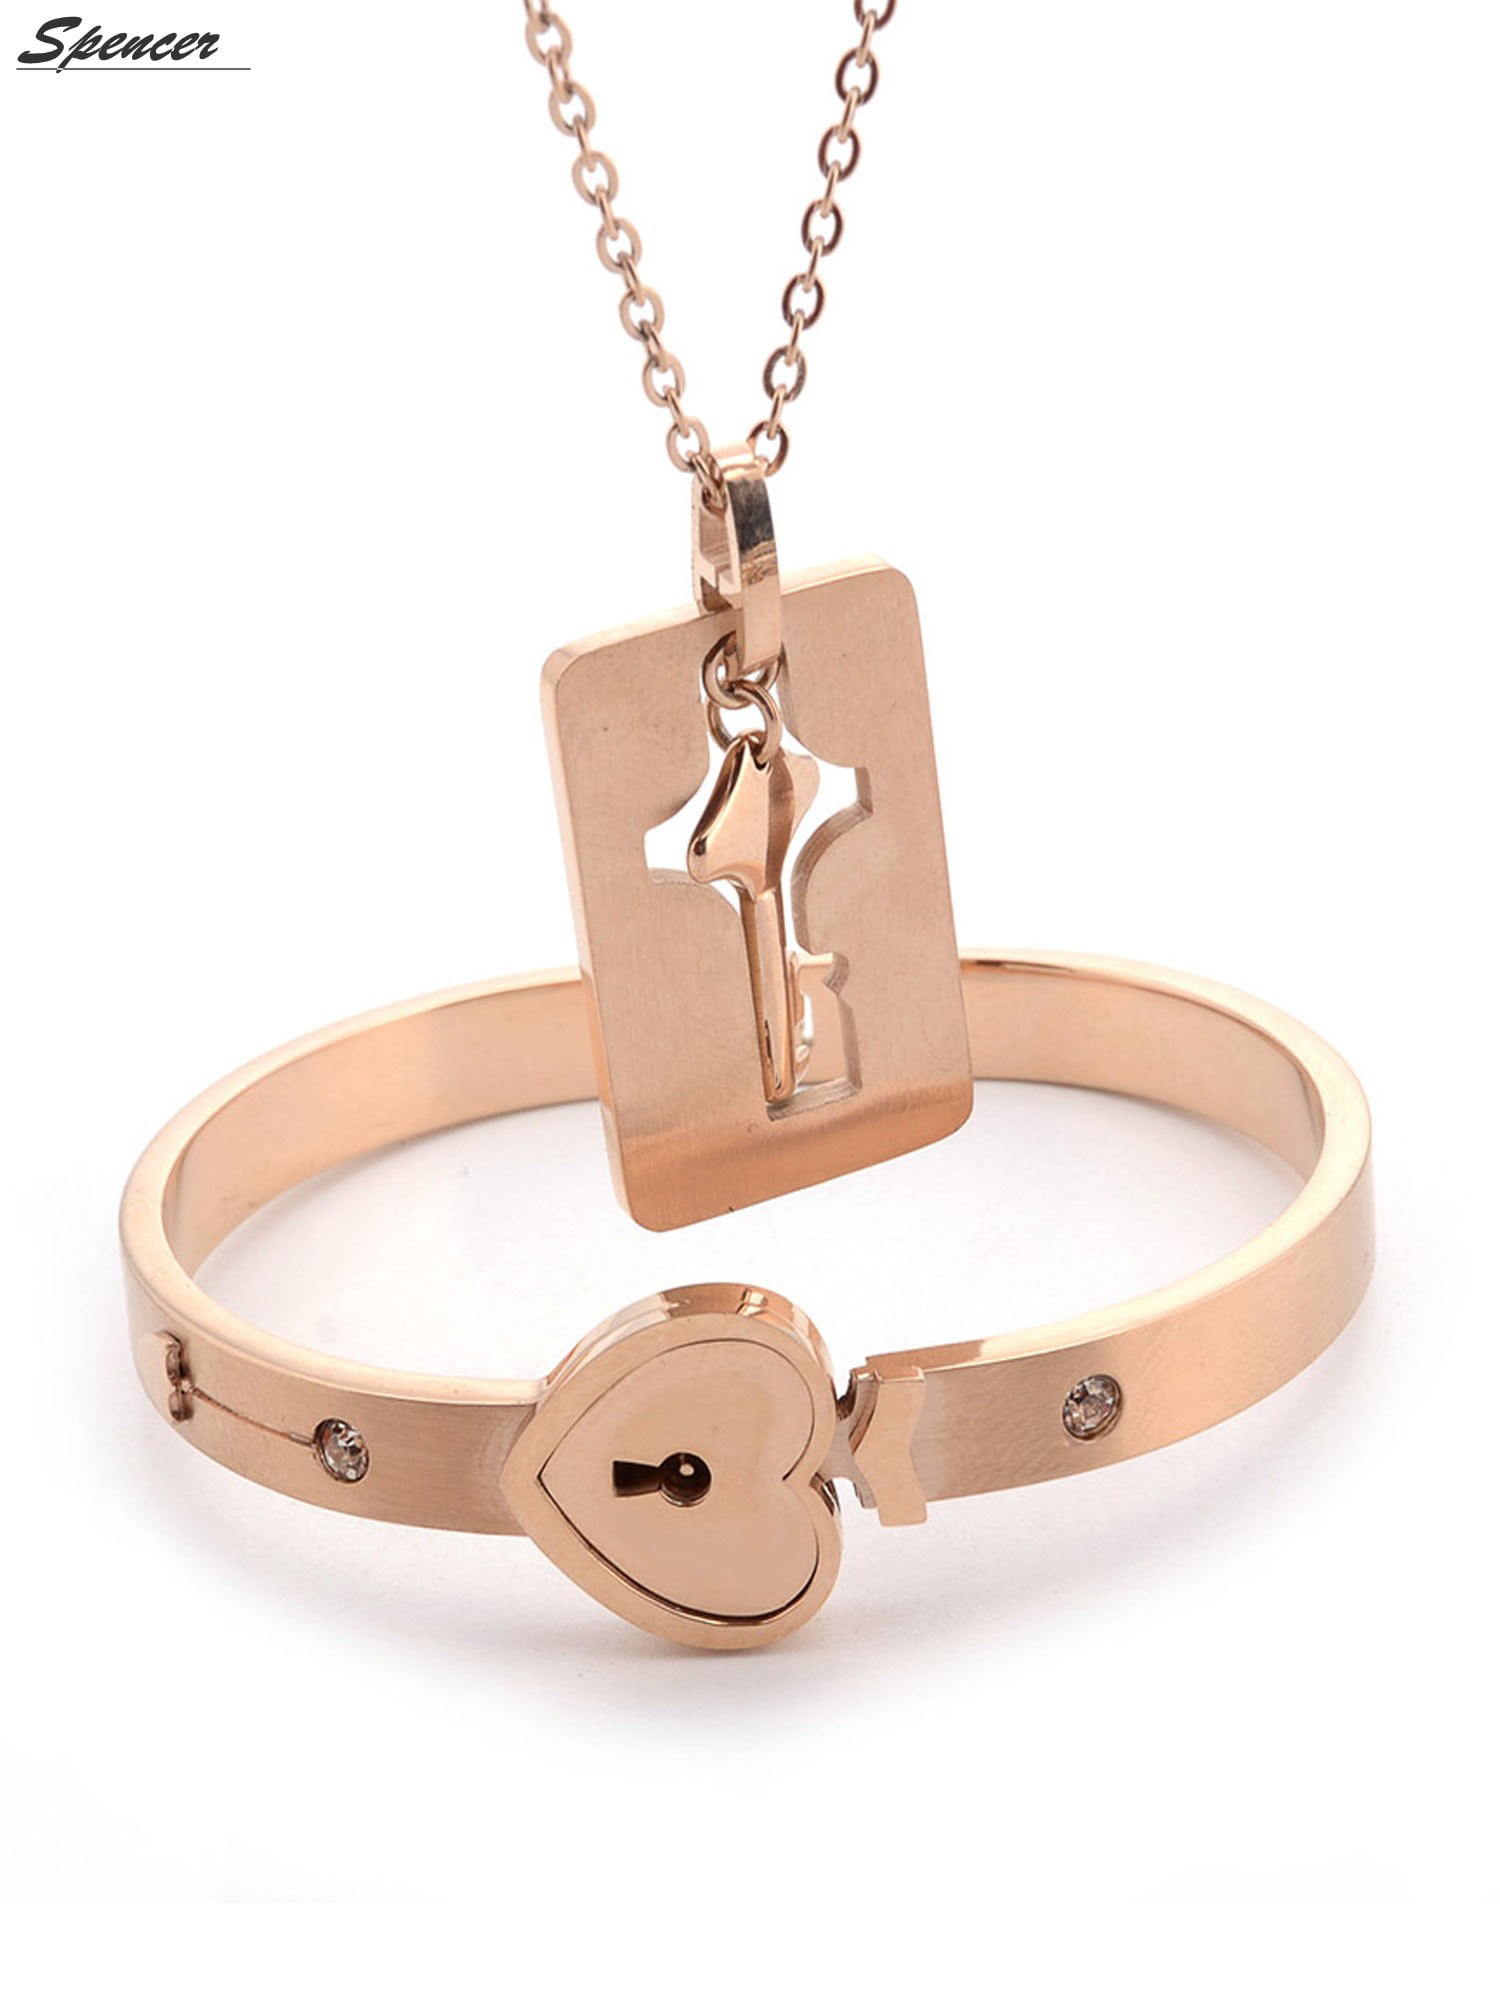 Spencer Titanium Steel Couple Love Heart Lock Bangle Bracelet & Key Pendant  Necklace Set for Women Men Valentine's Day Anniversary Gifts Silver 